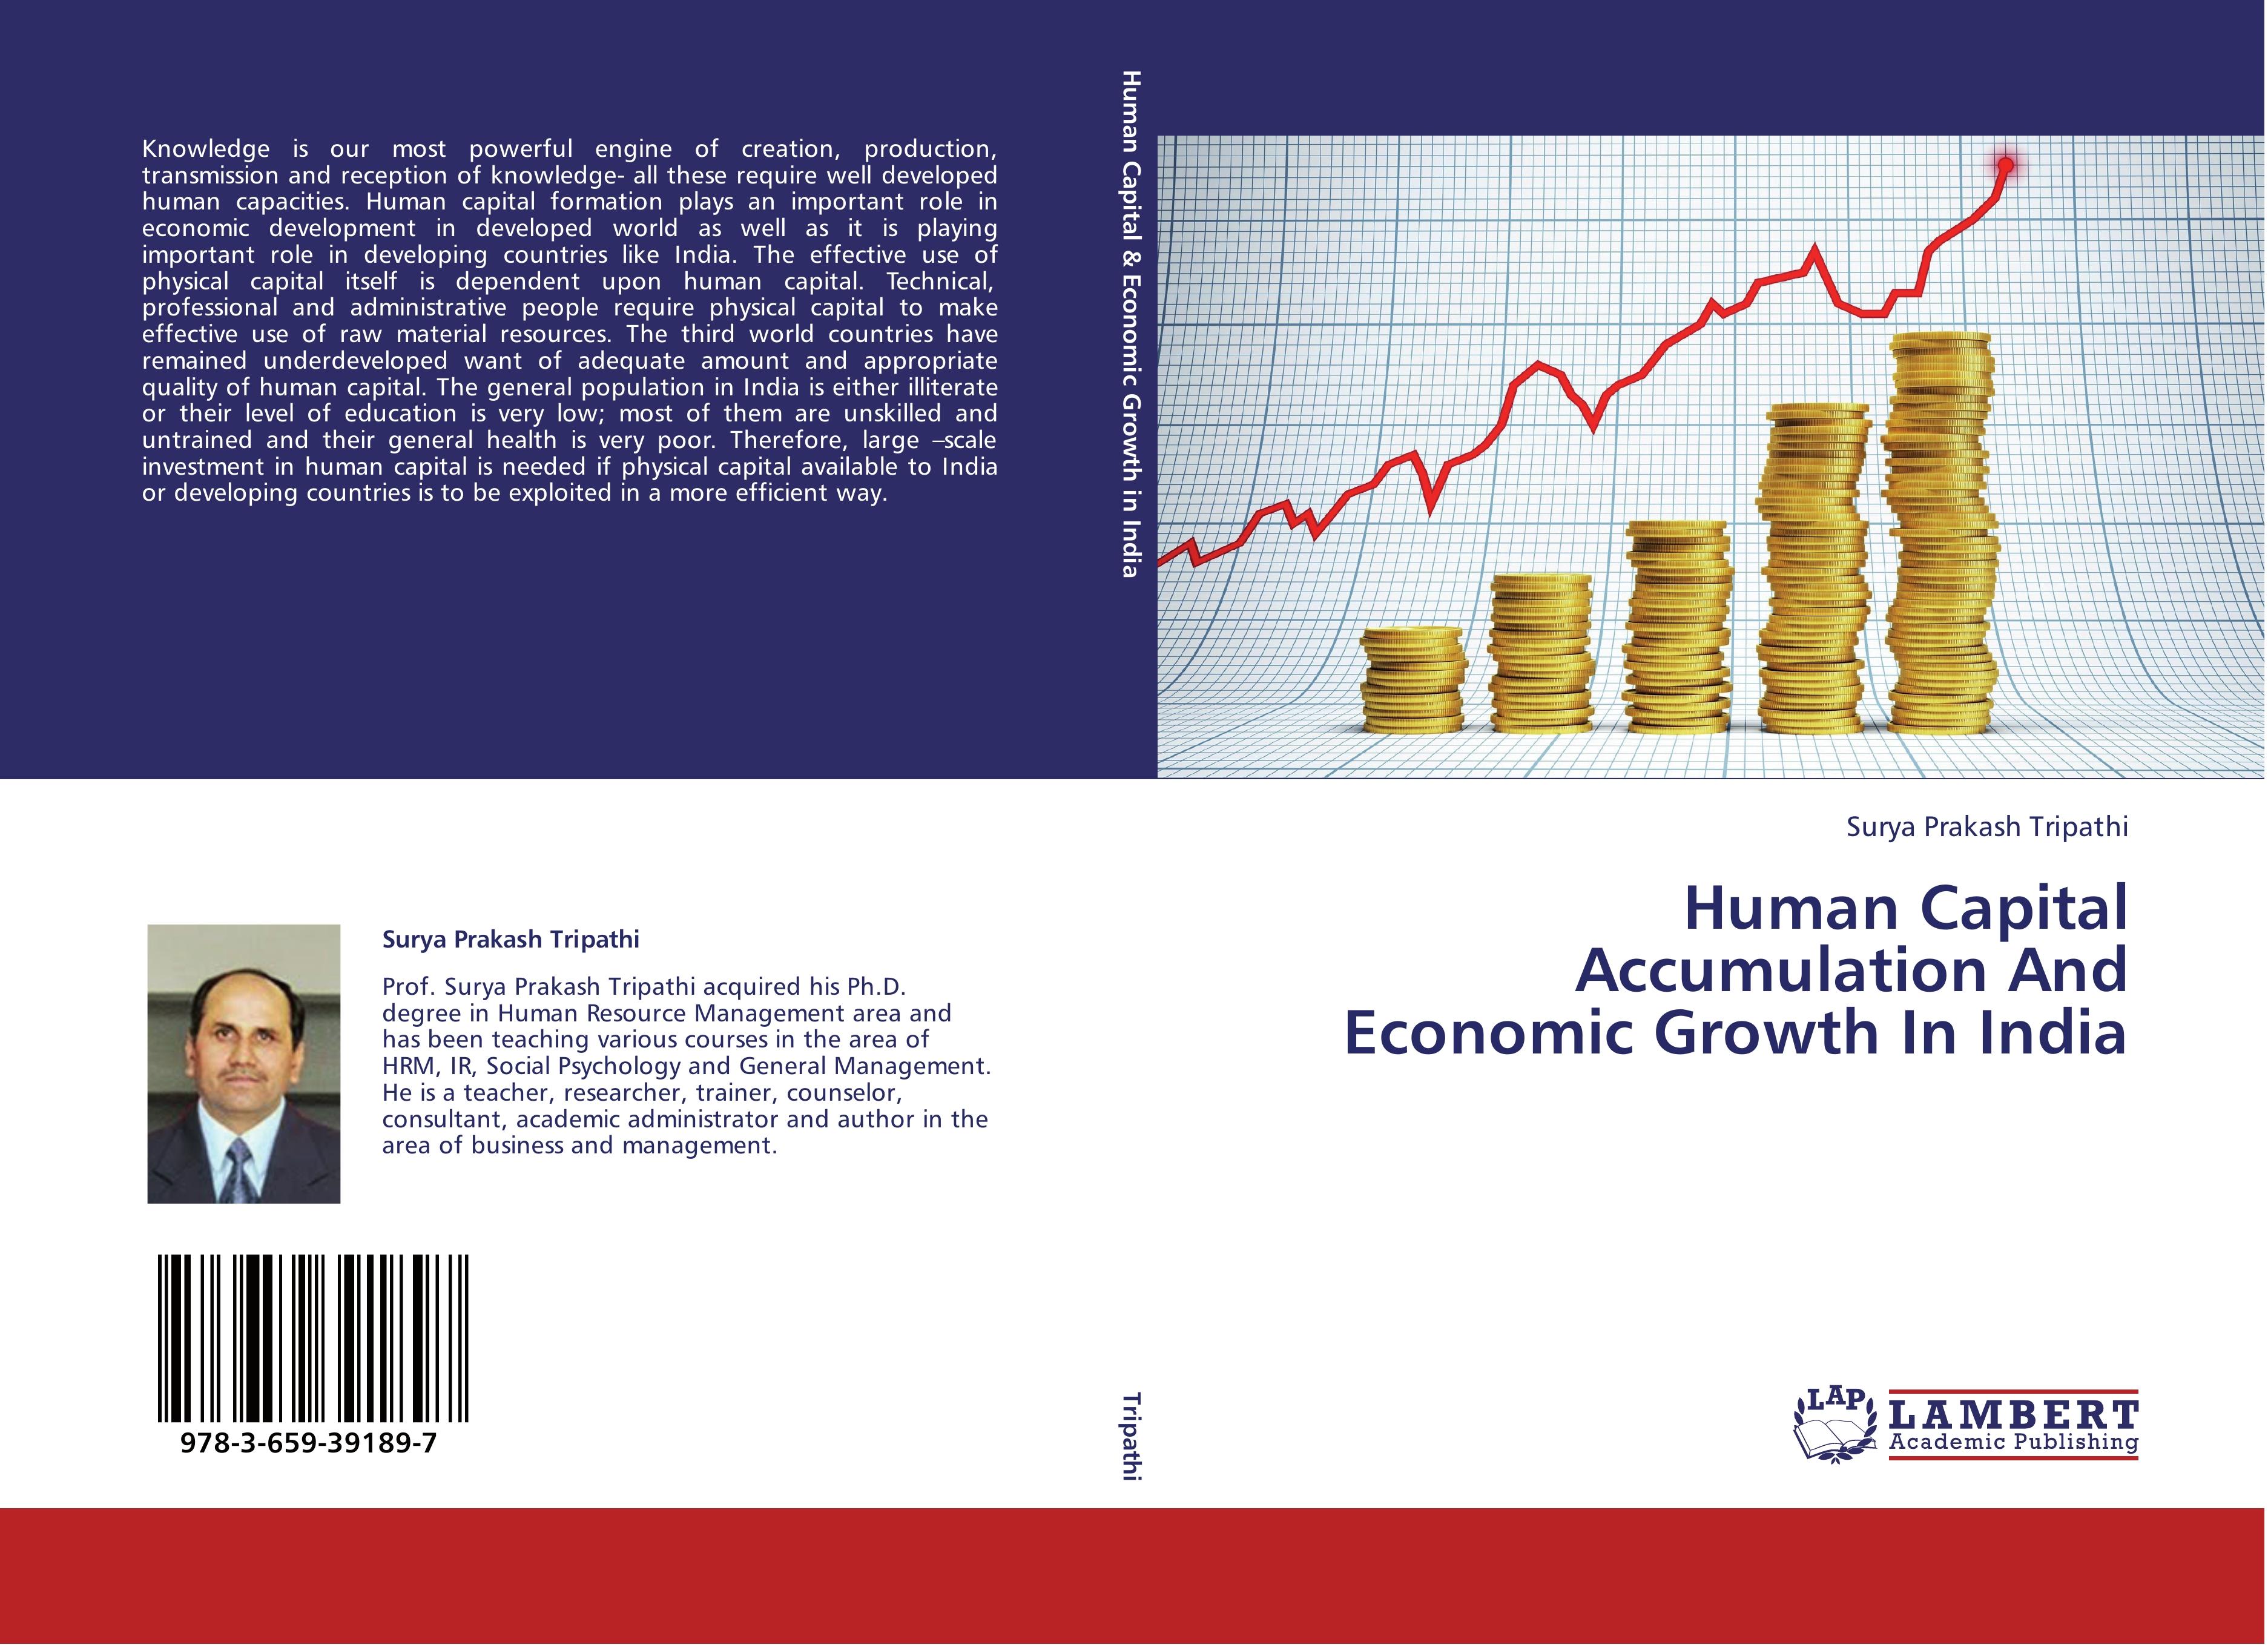 Human Capital Accumulation And Economic Growth In India - Surya Prakash Tripathi